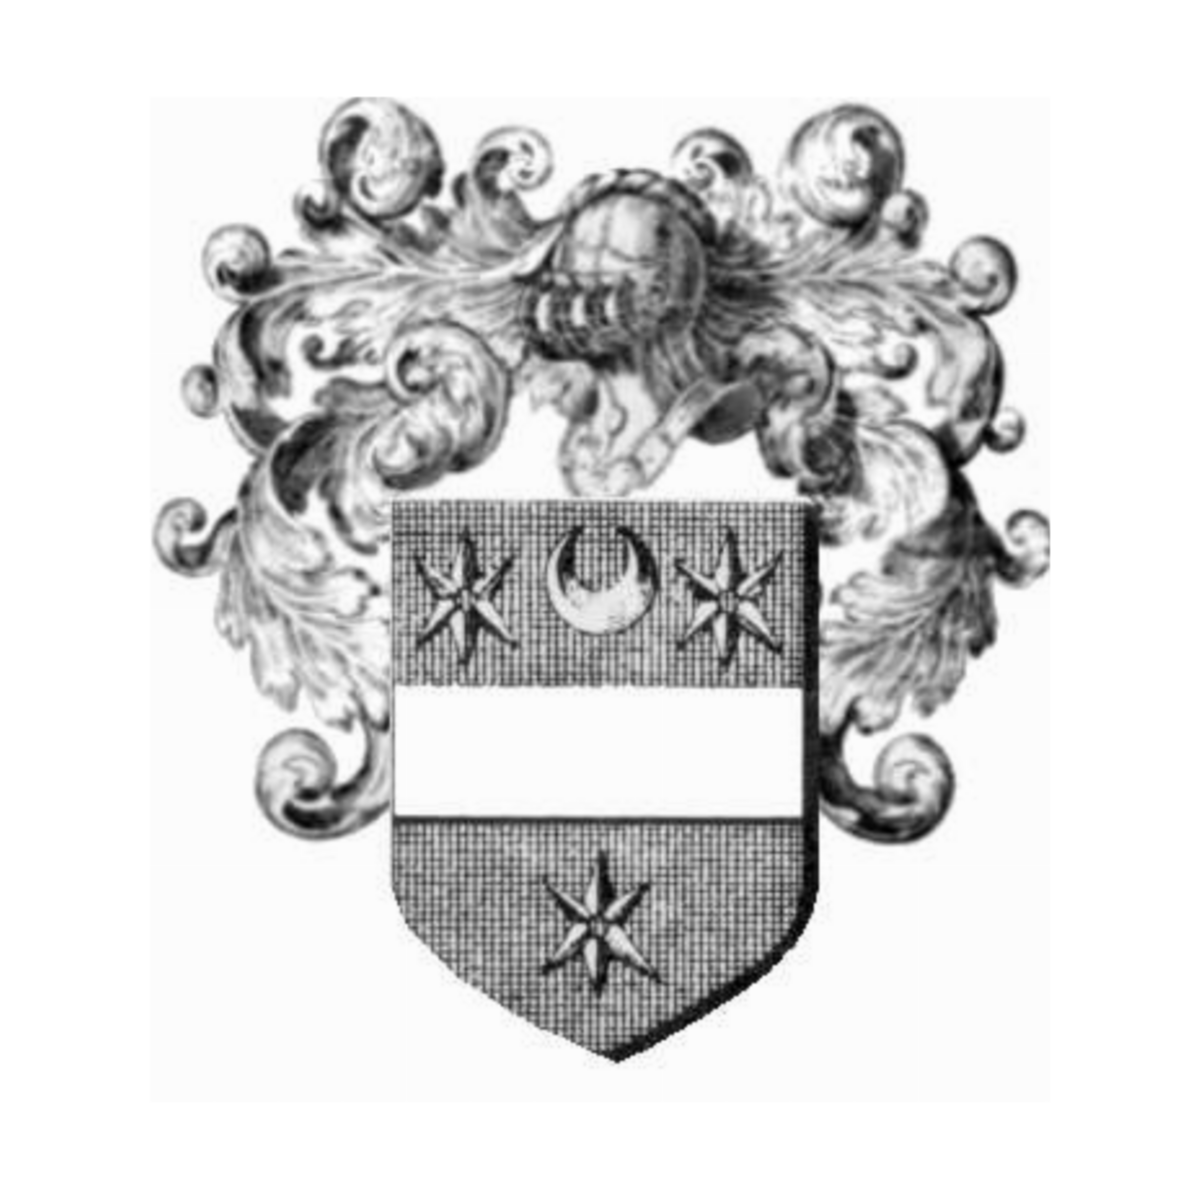 Wappen der FamiliePorzamparc